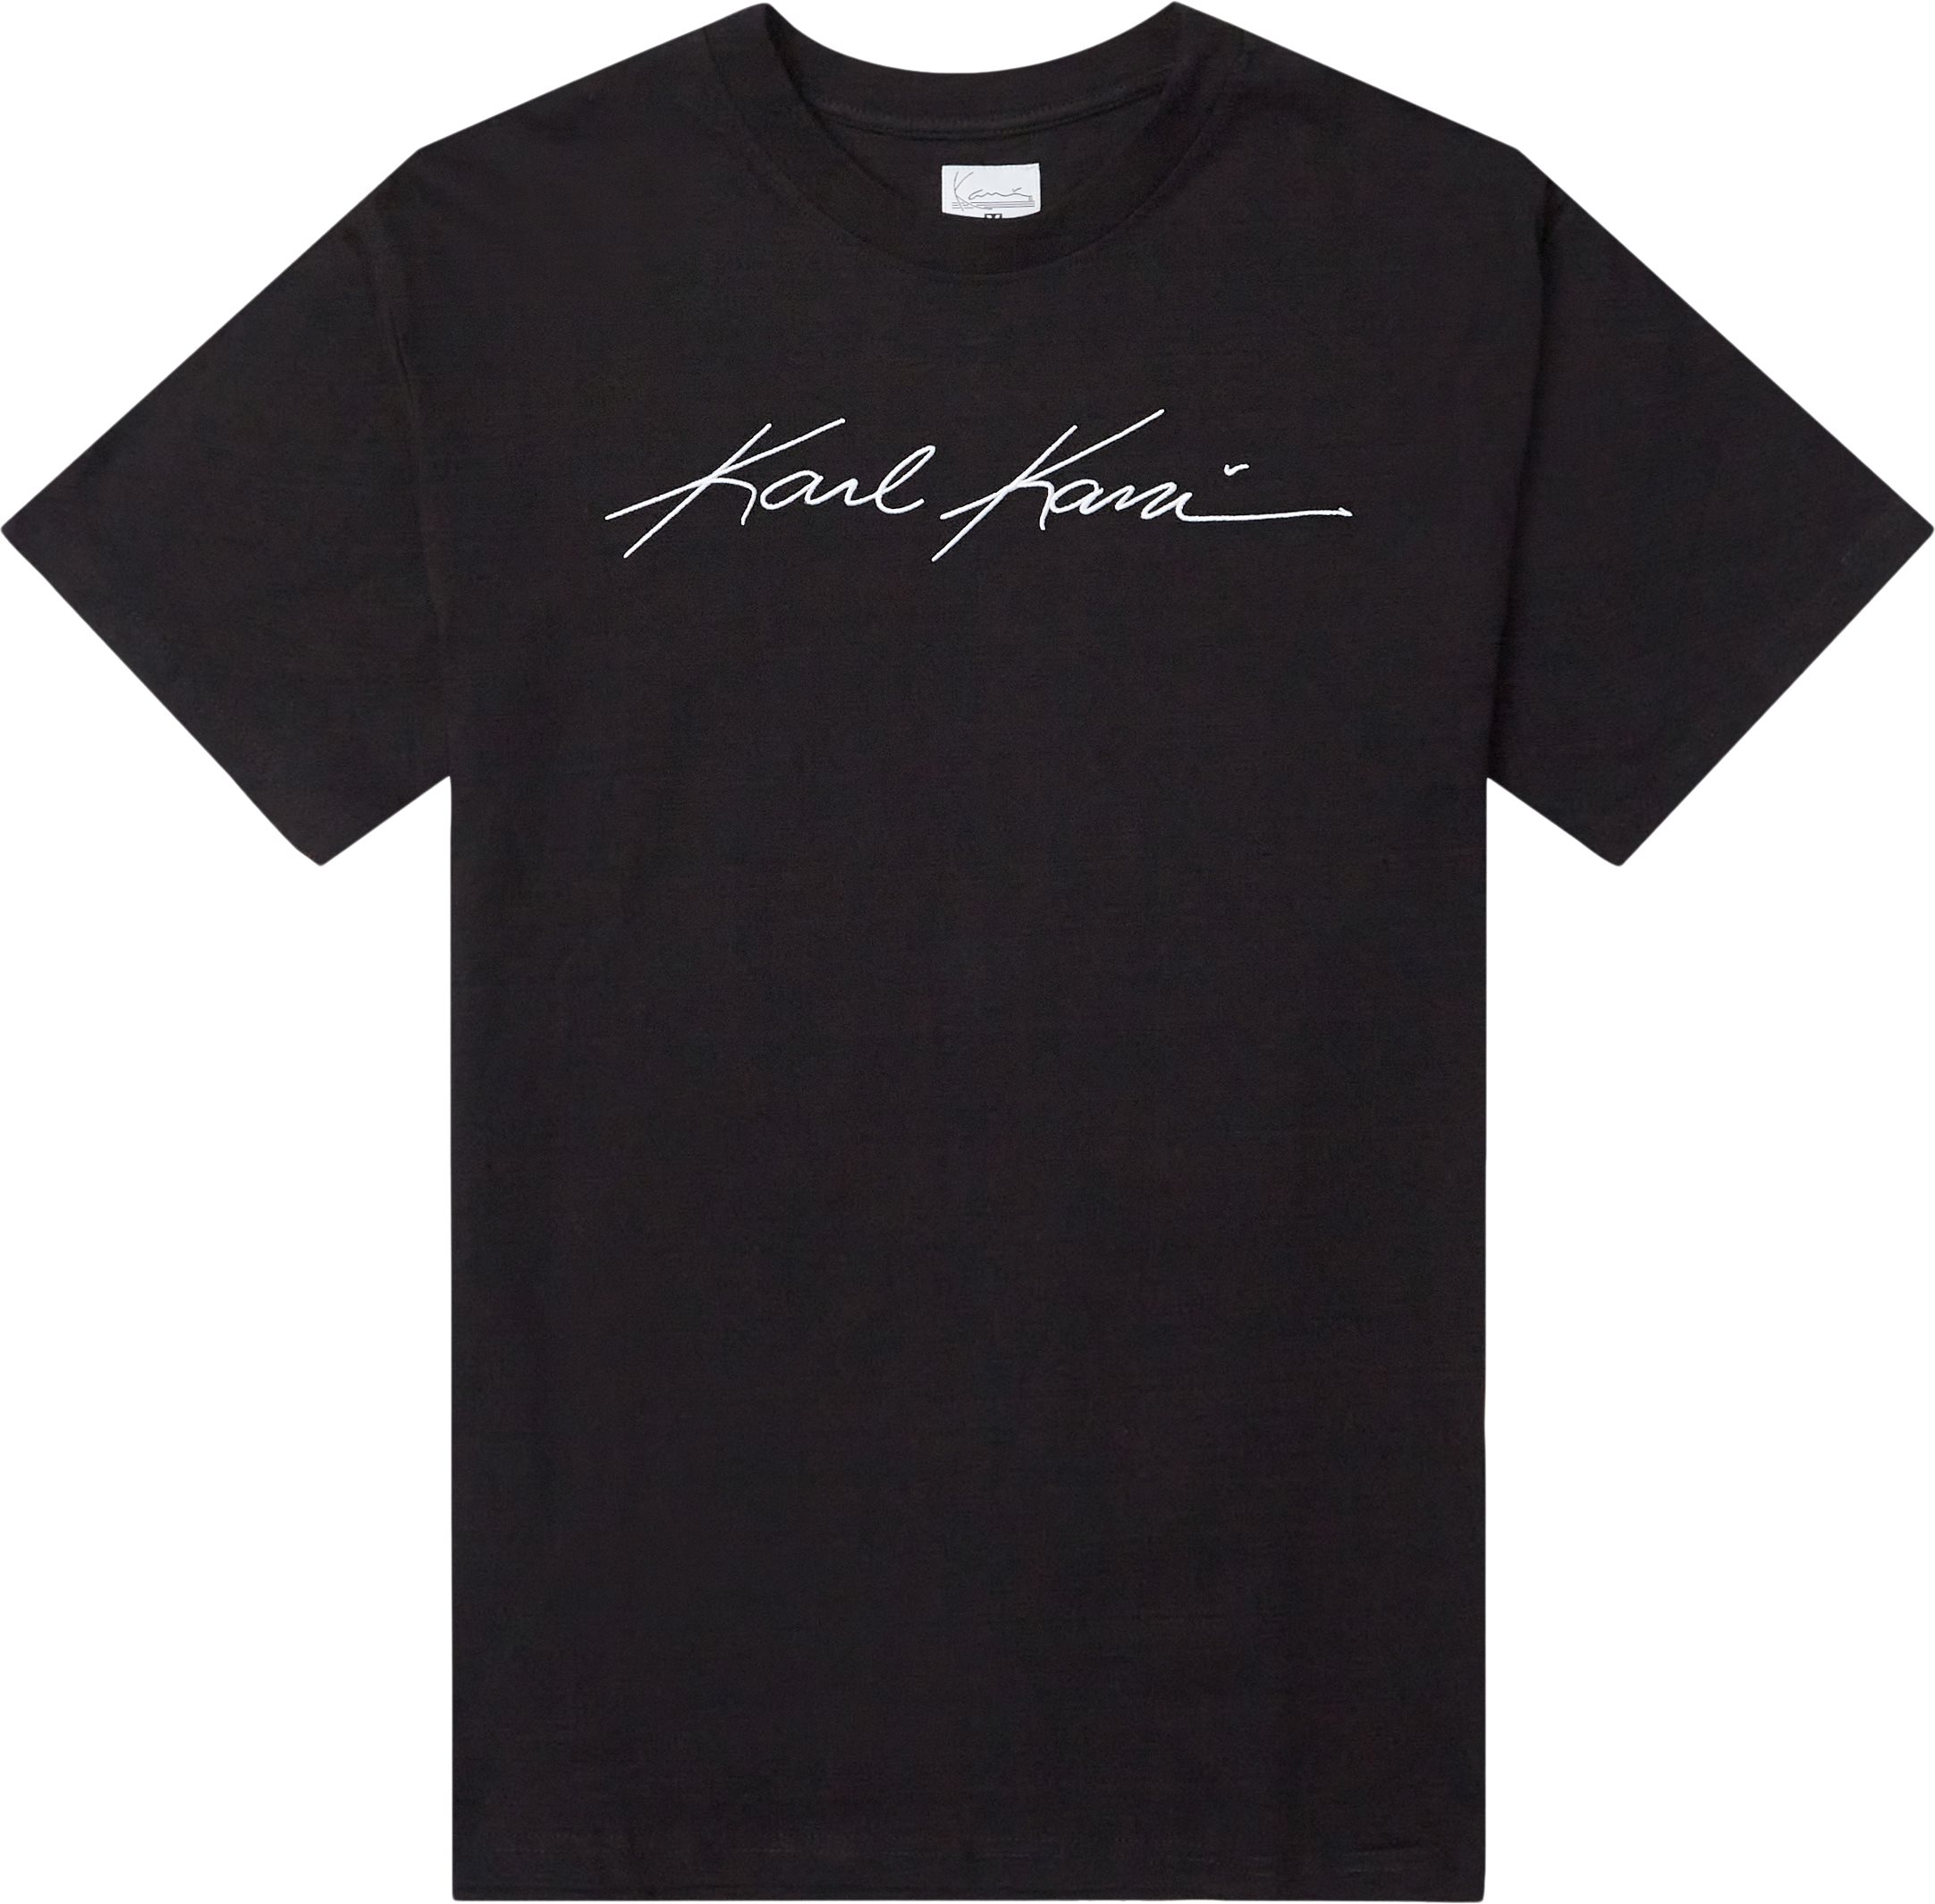 Autograph Tee - T-shirts - Regular fit - Black